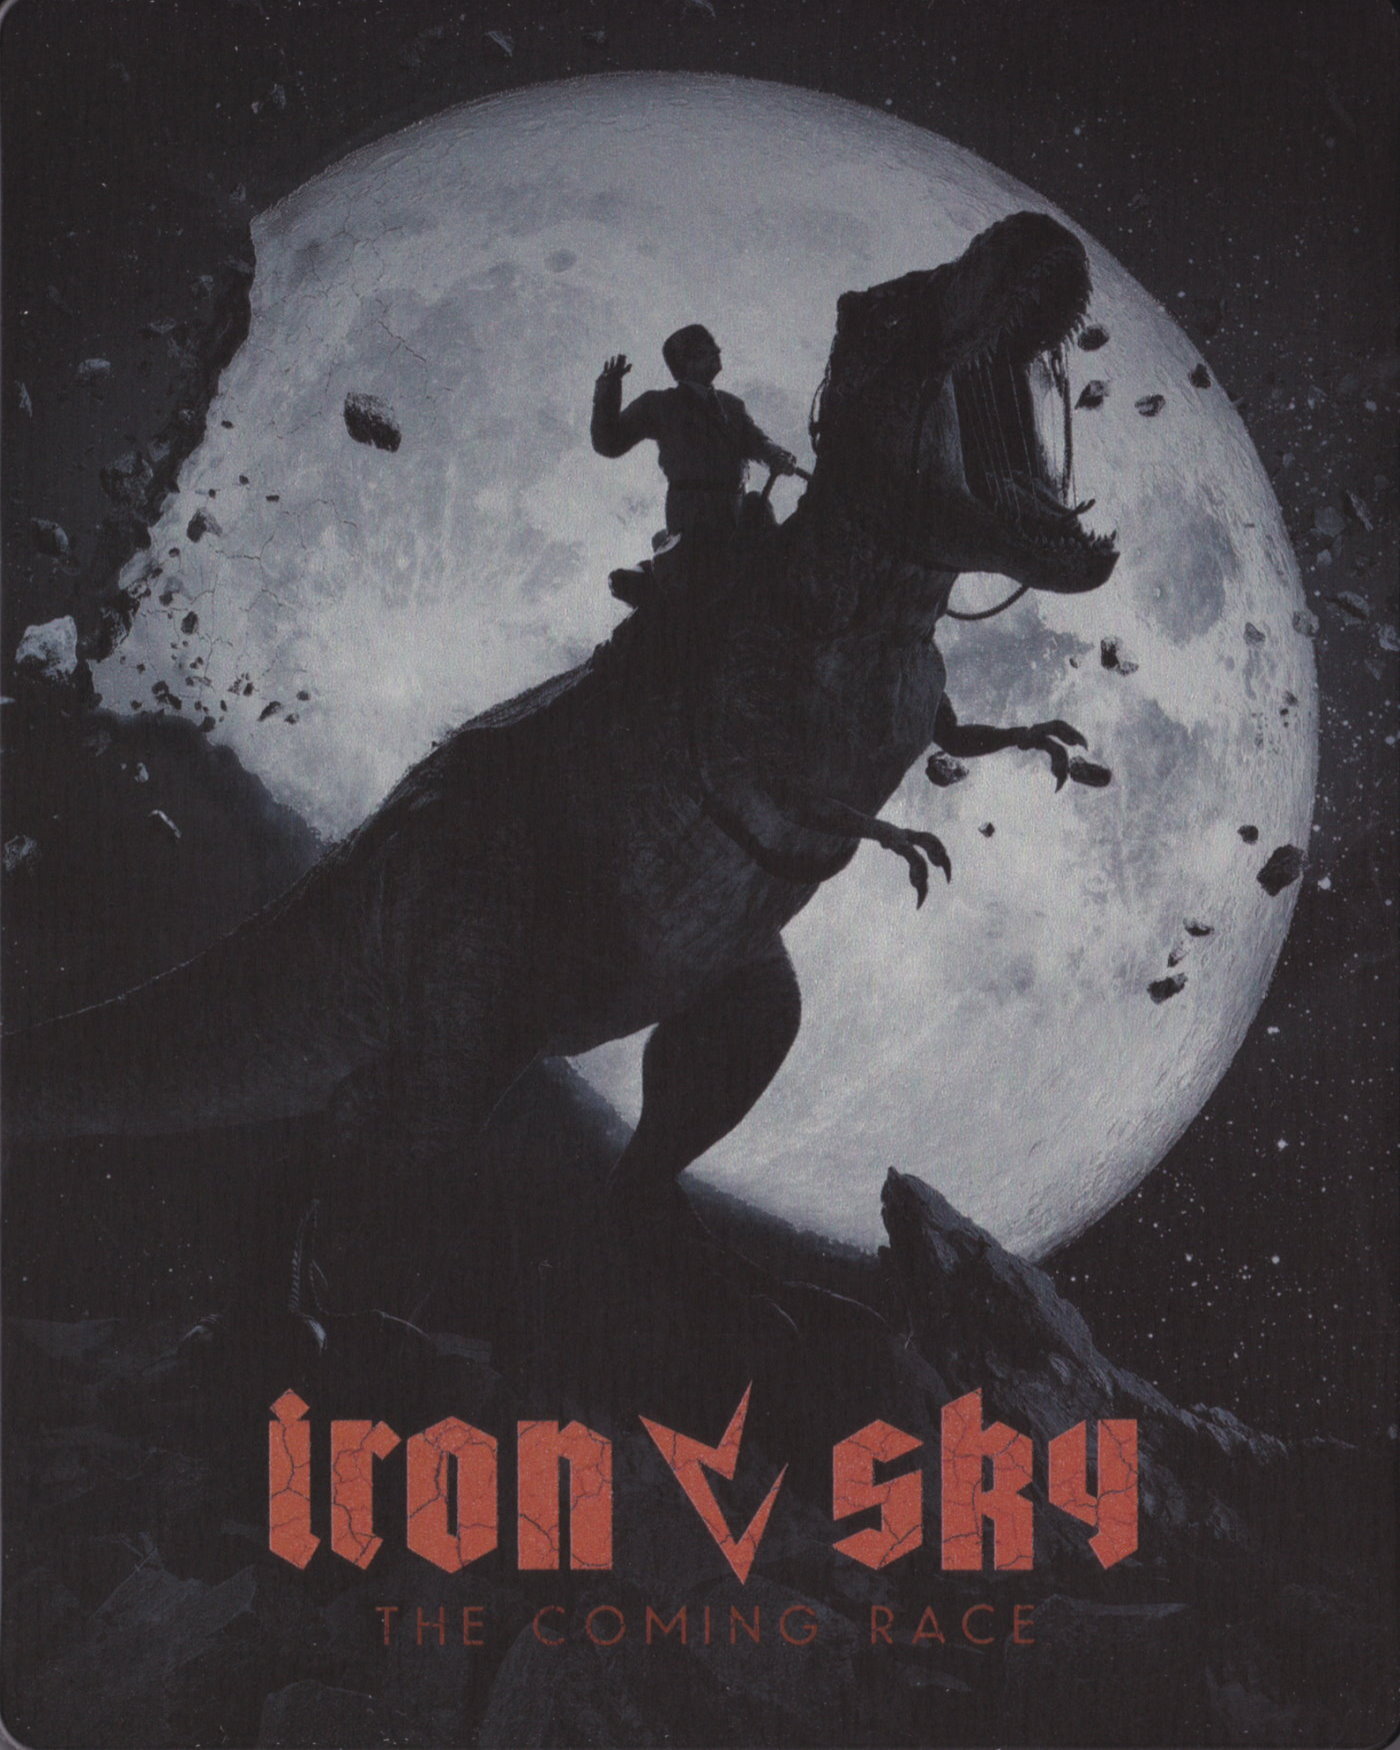 Cover - Iron Sky - The Comming Race.jpg